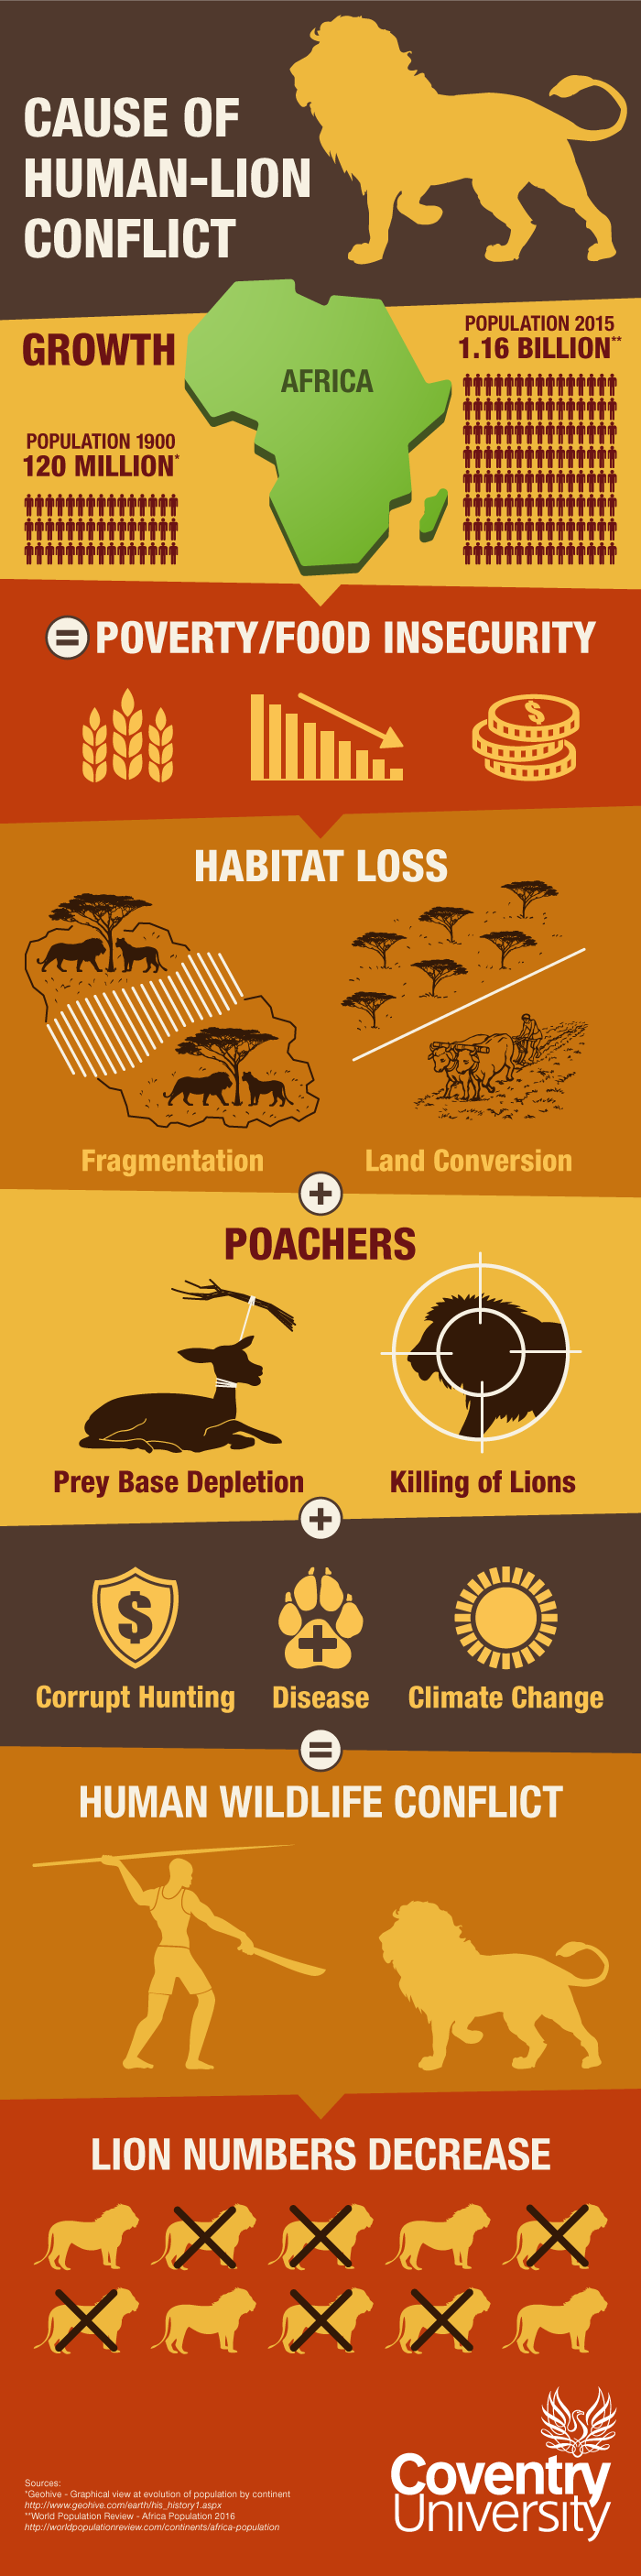 15886-16-ALERT-Lions-Infographic---Human-Lion-Conflict-V2